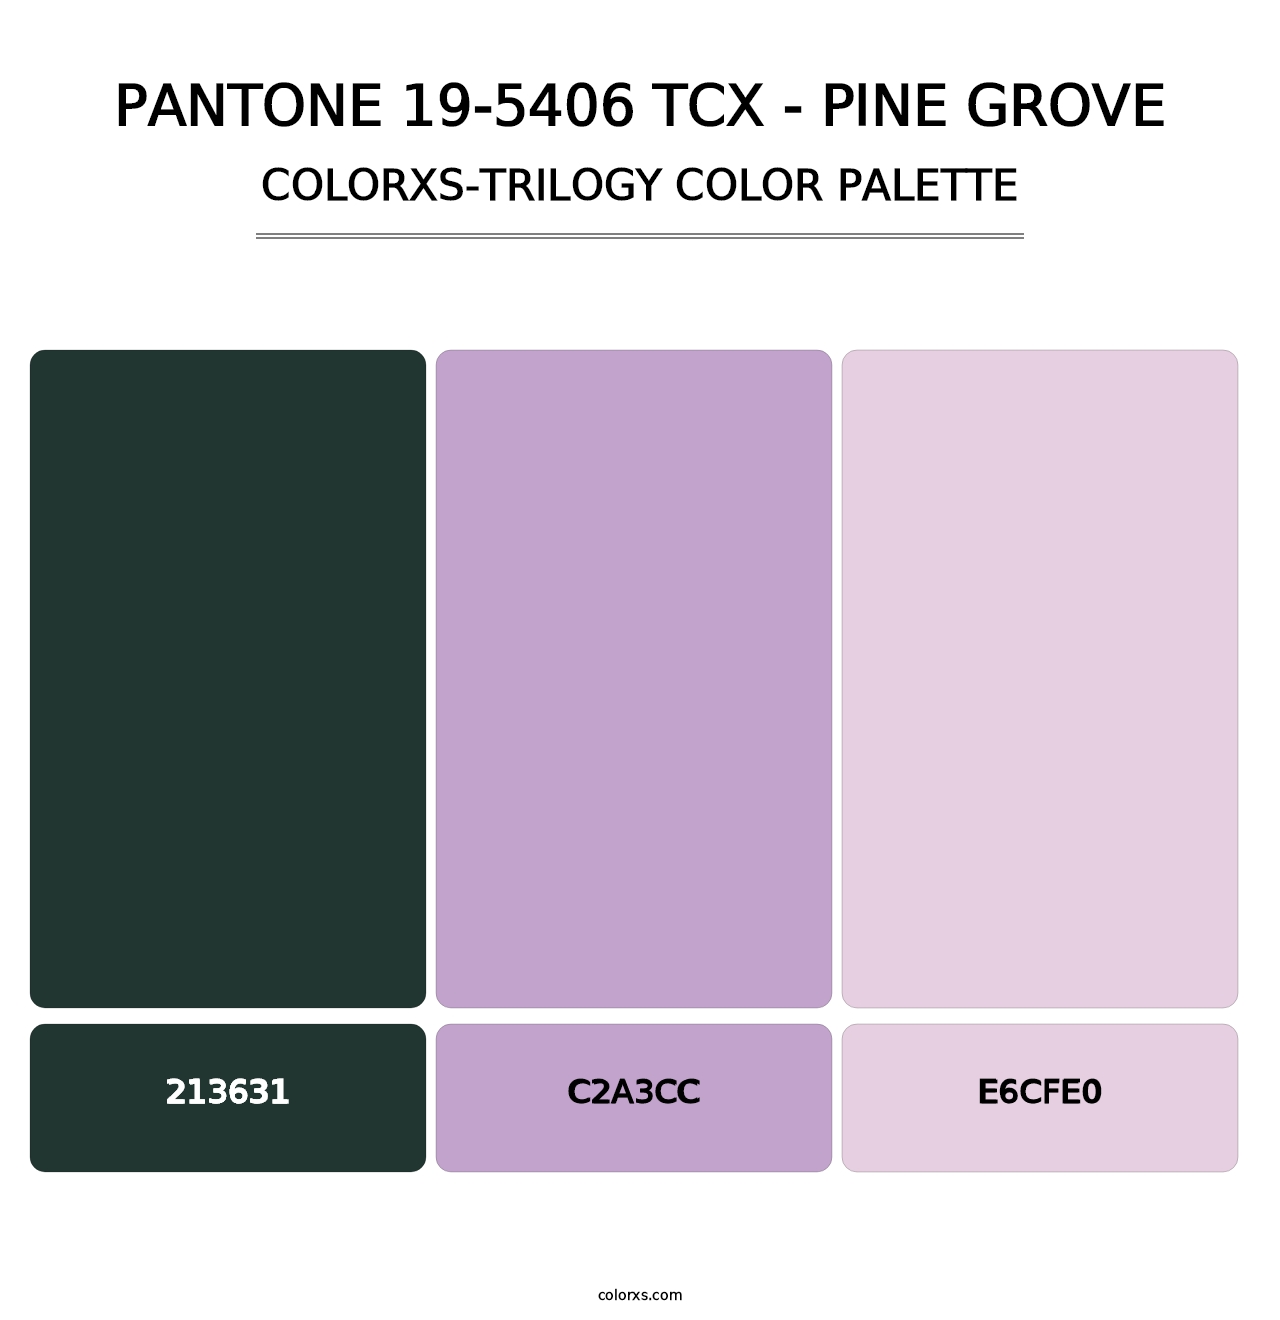 PANTONE 19-5406 TCX - Pine Grove - Colorxs Trilogy Palette